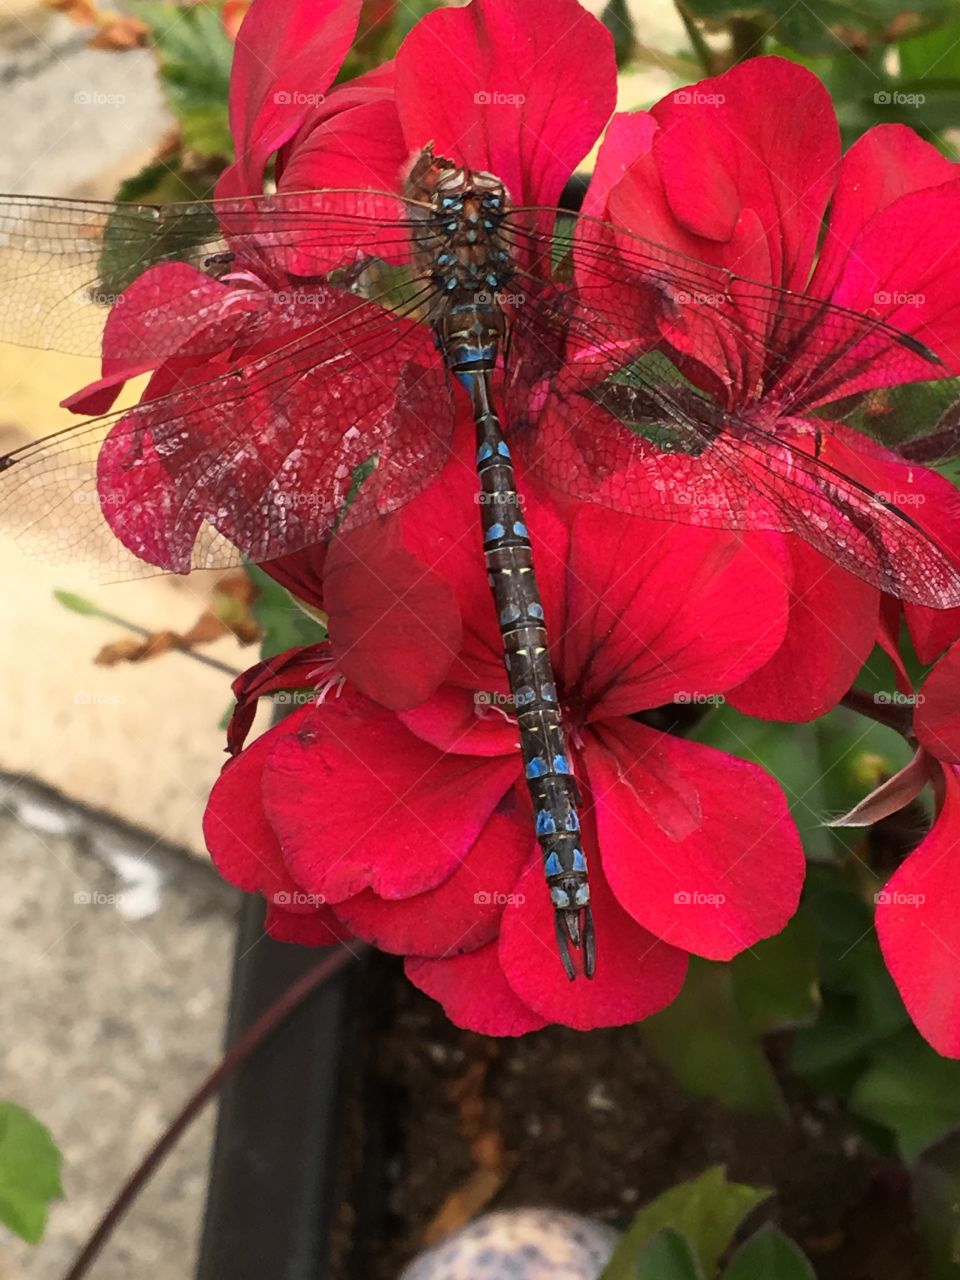 Blue dragonfly on red geranium flower